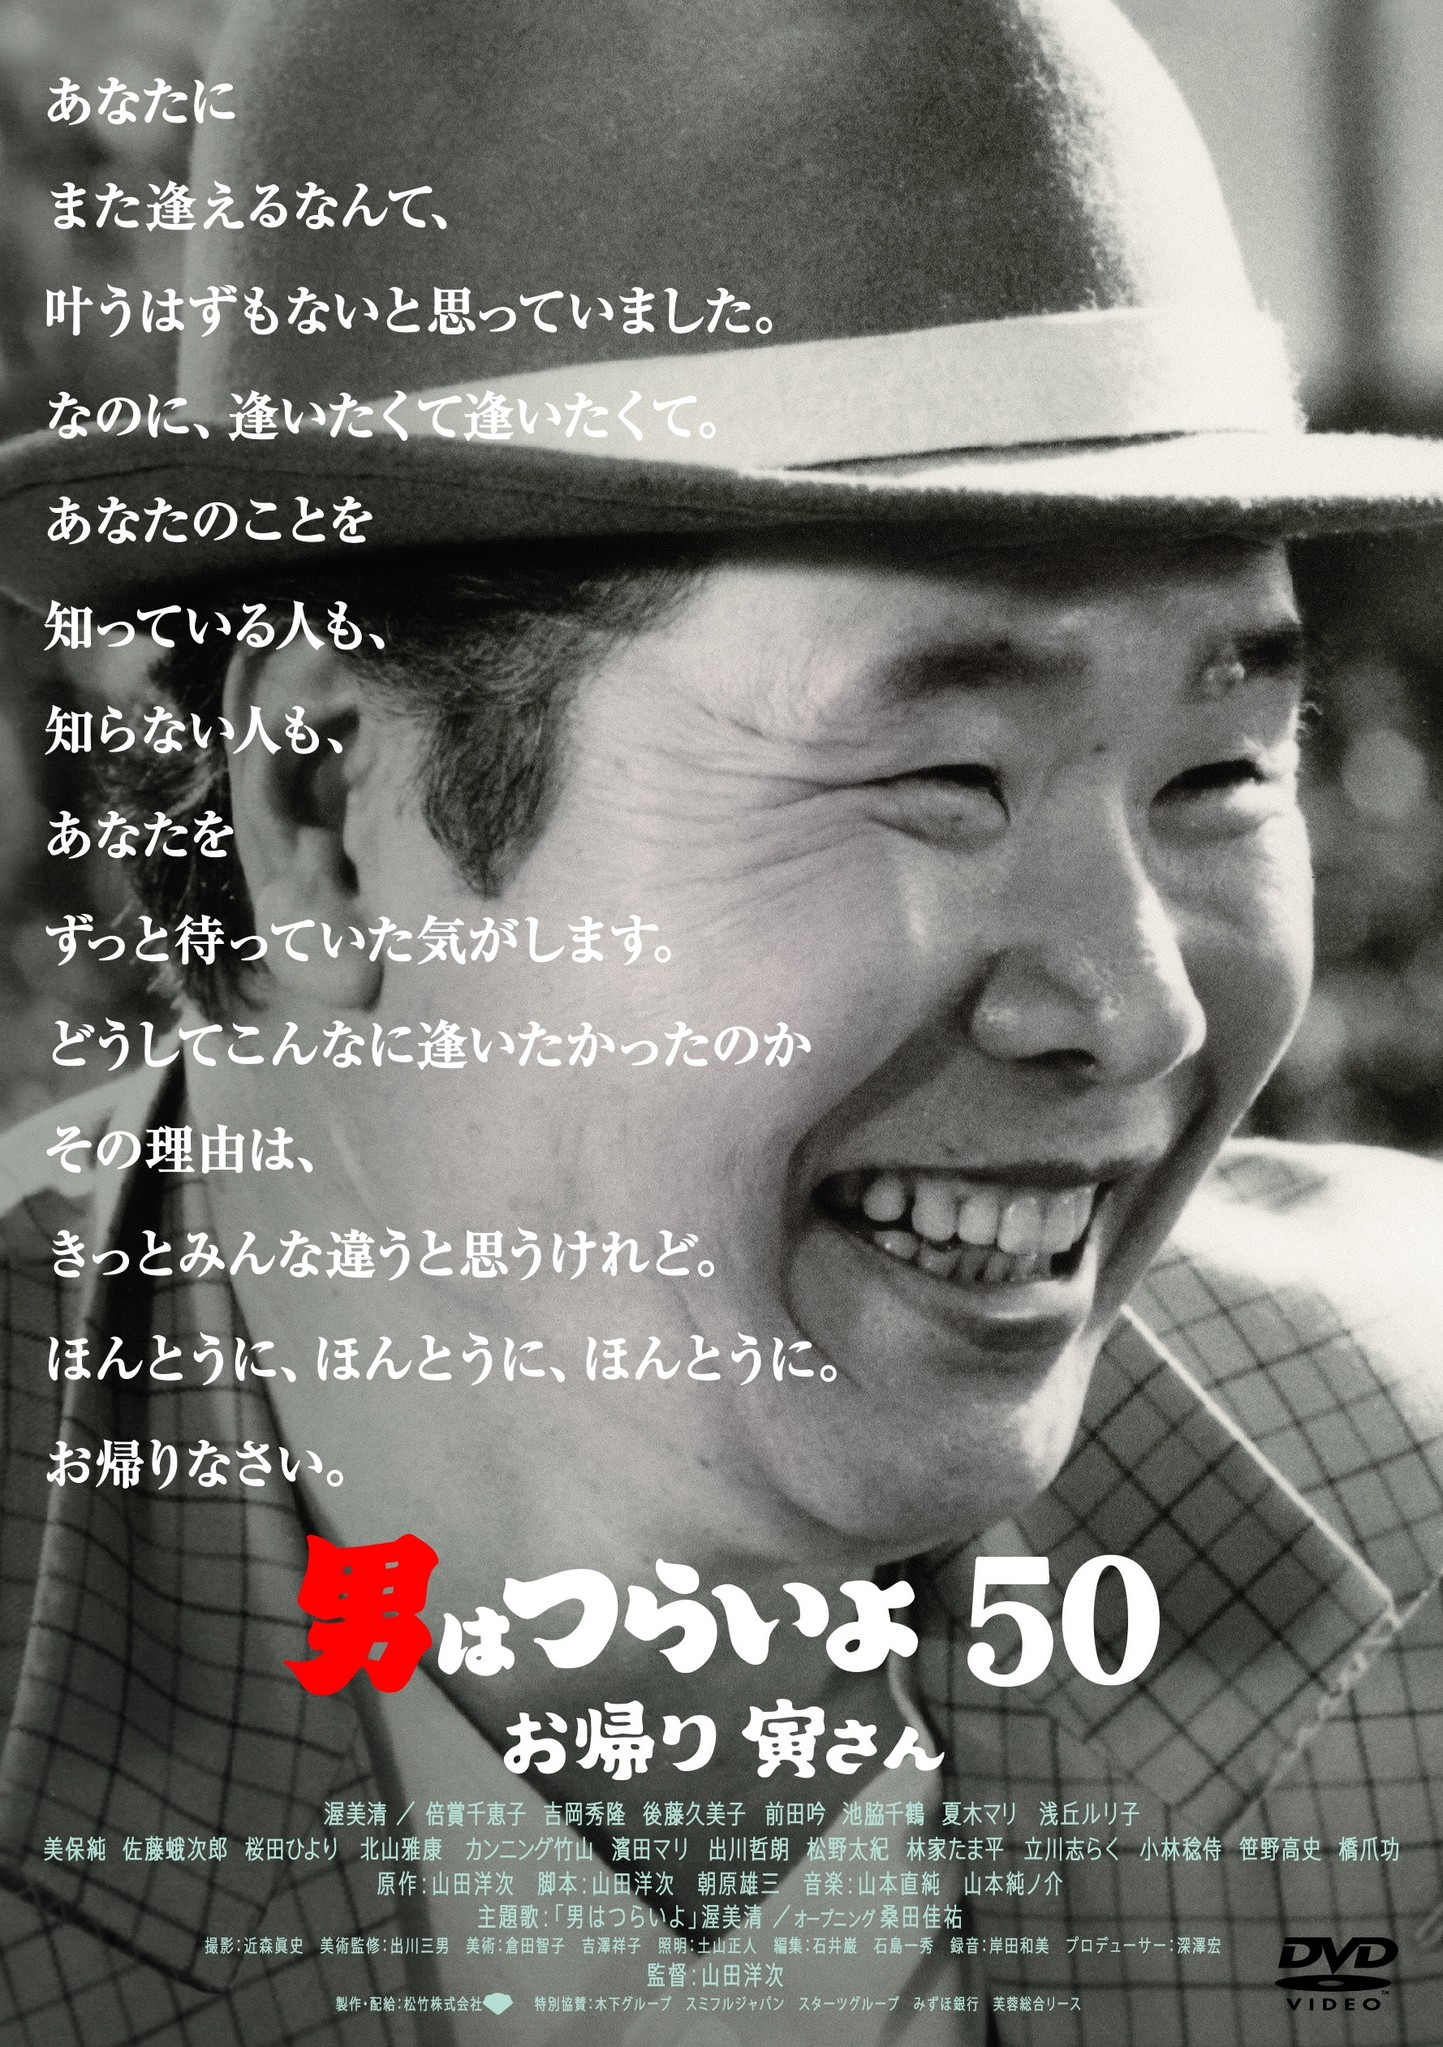 Tsutayaで楽しむenjoy Home 男はつらいよ 最新作から 過去全49作品 まで すべてtsutayaで楽しめます 株式会社蔦屋書店のプレスリリース